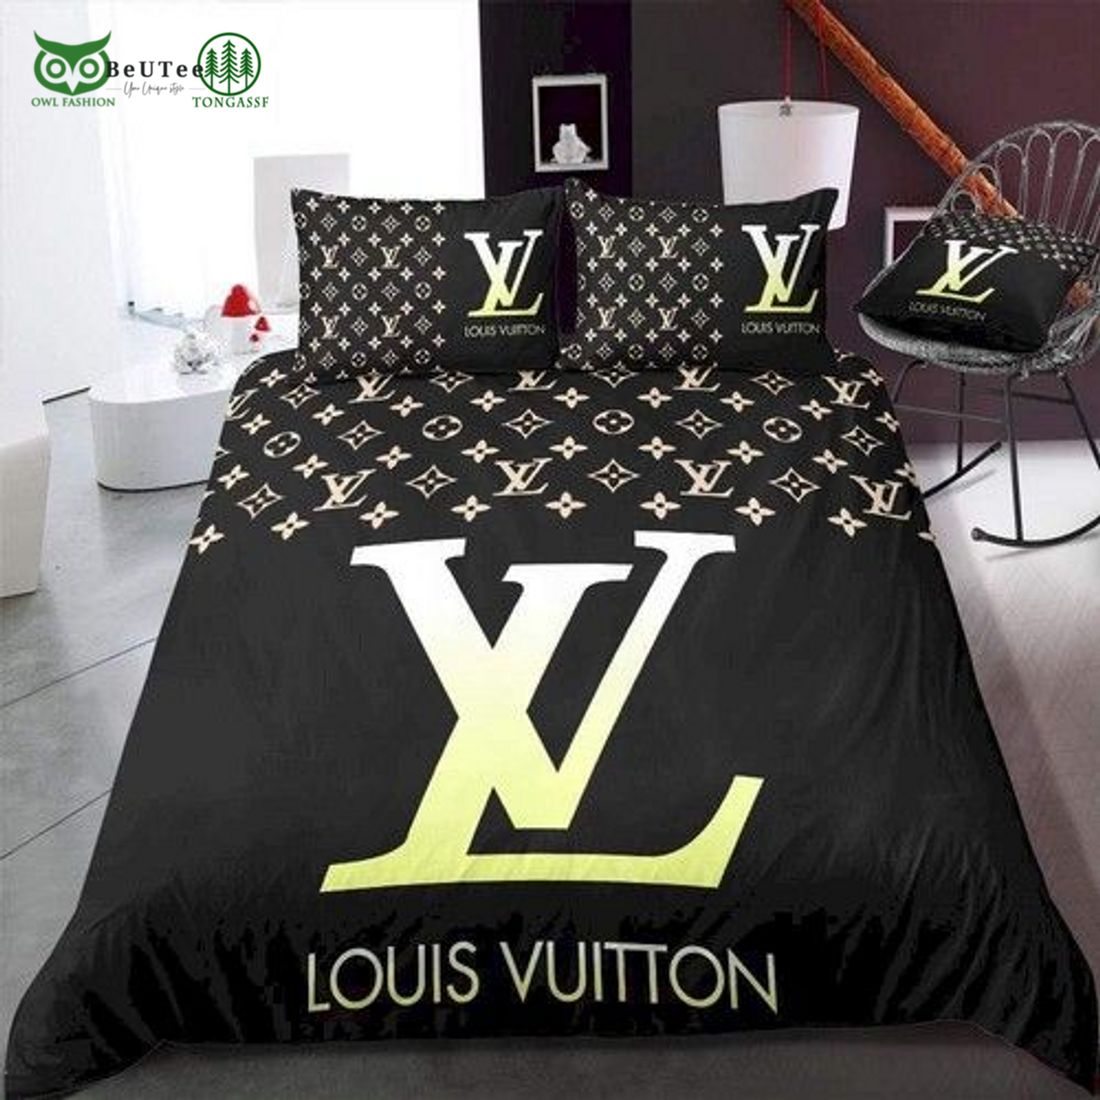 LV Louis Vuitton Luxury Brand Black Bedding Set Bedroom - Owl Fashion Shop